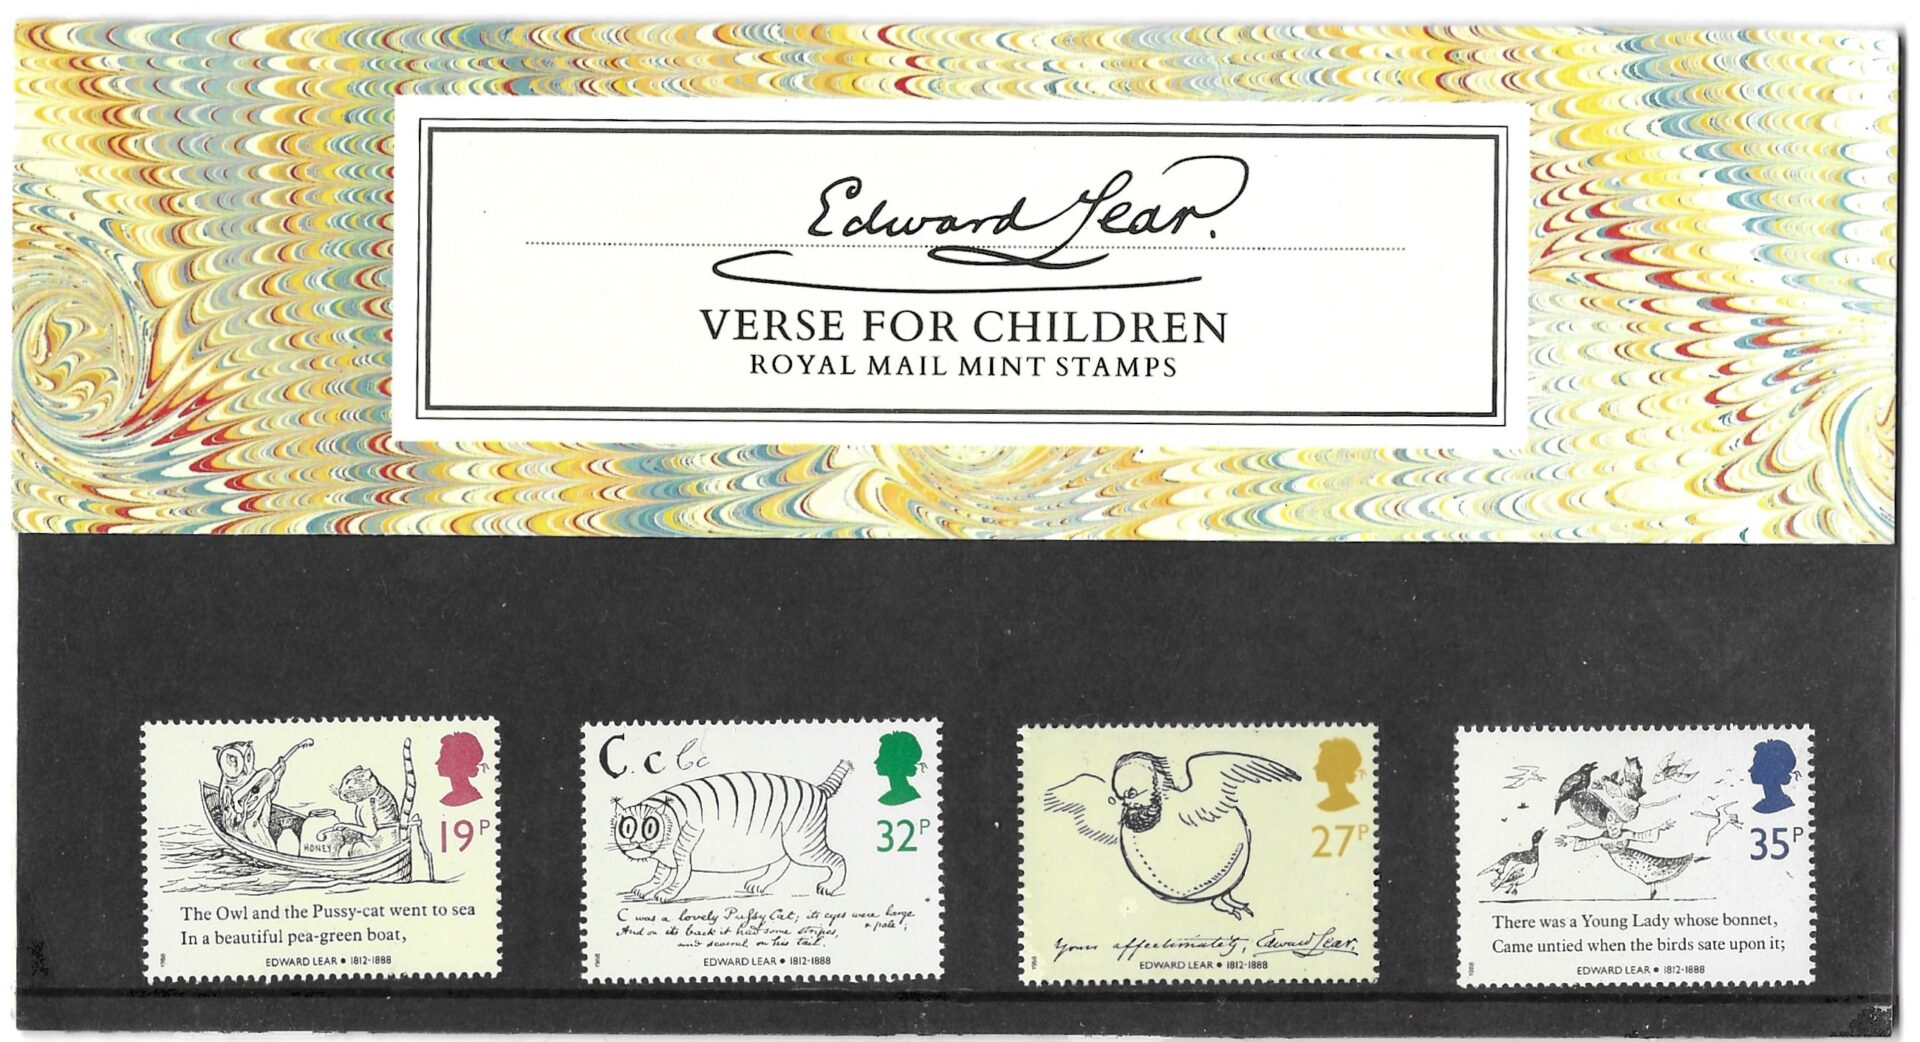 Edward Lear Verse for Children 1988 Presentation Pack